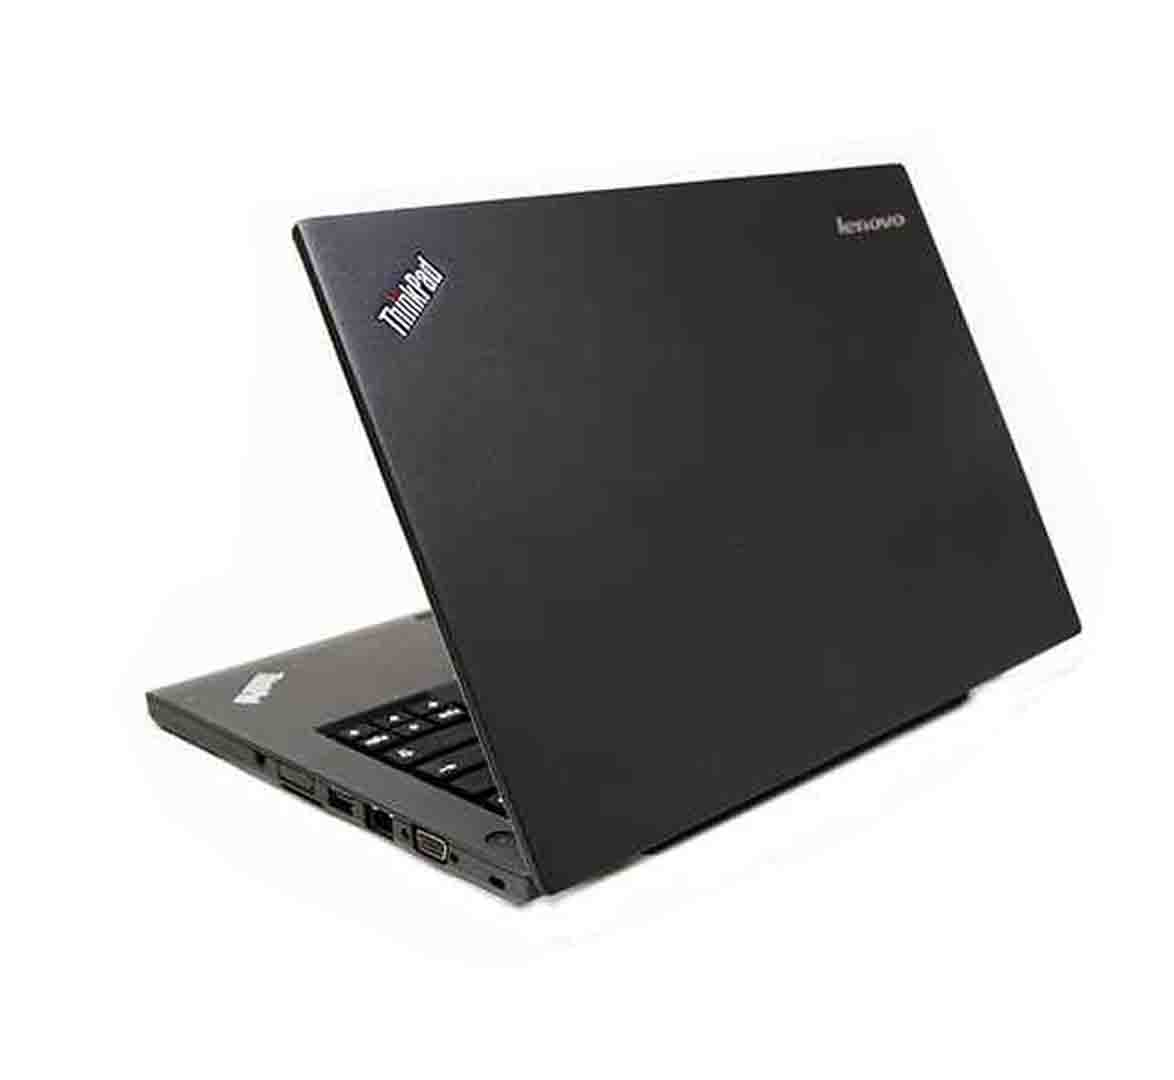 Lenovo ThinkPad T450 Business Laptop, Intel Core i5-5th Gen. CPU, 8GB RAM, 256GB SSD, 14.1 inch Display, Windows 10